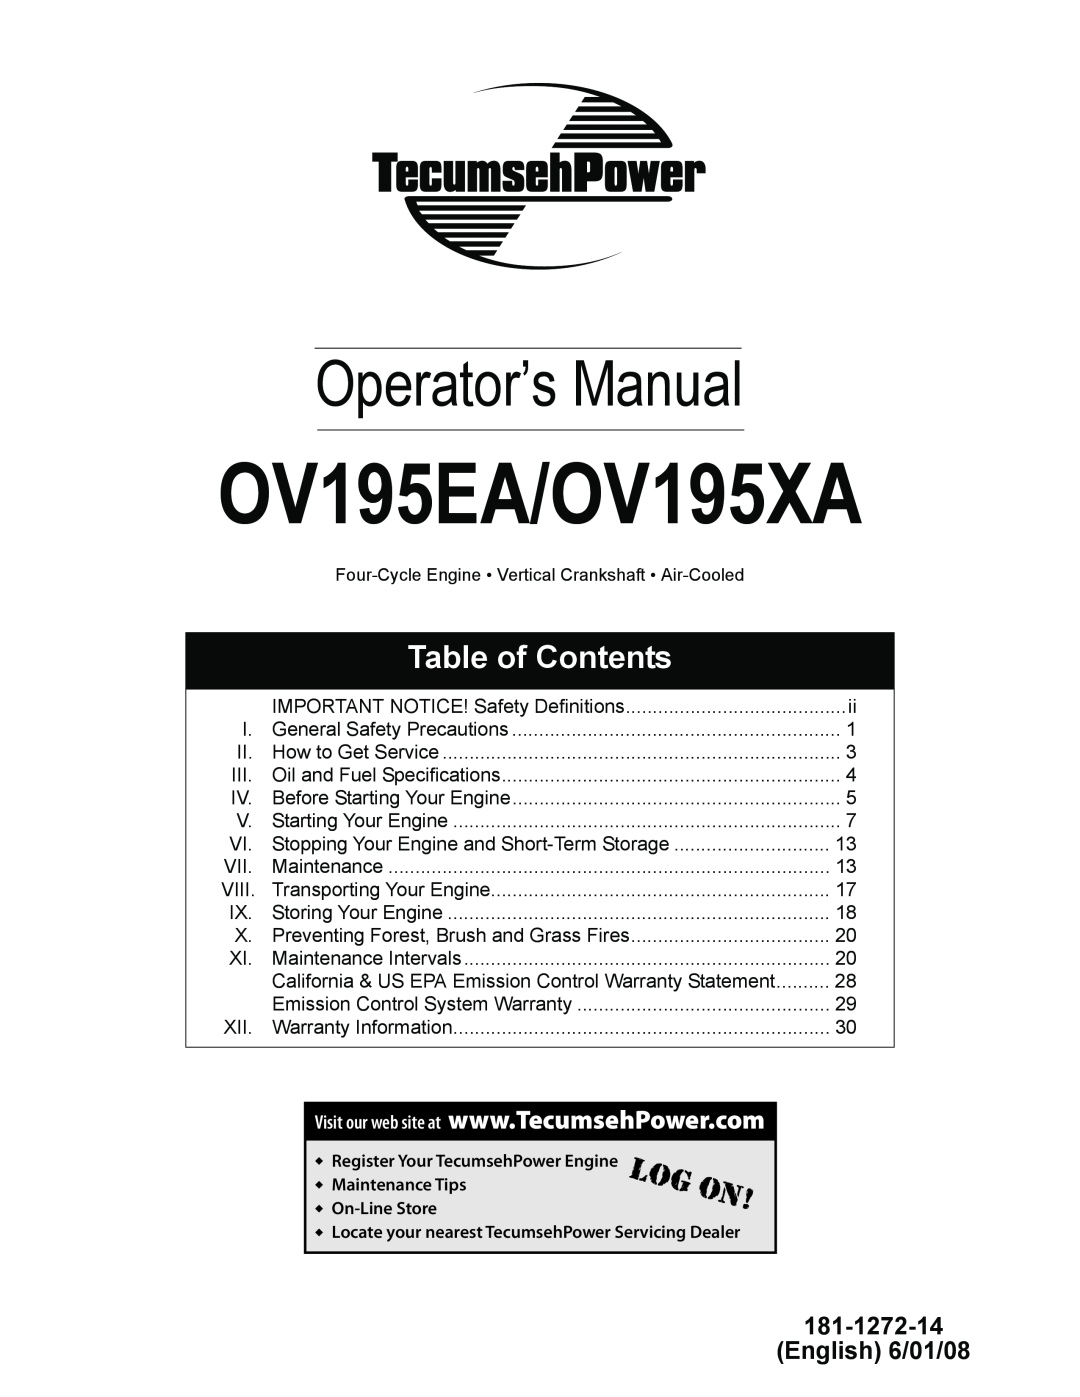 Tecumseh specifications English 6/01/08, OV195EA/OV195XA, Operator’s Manual, Table of Contents 